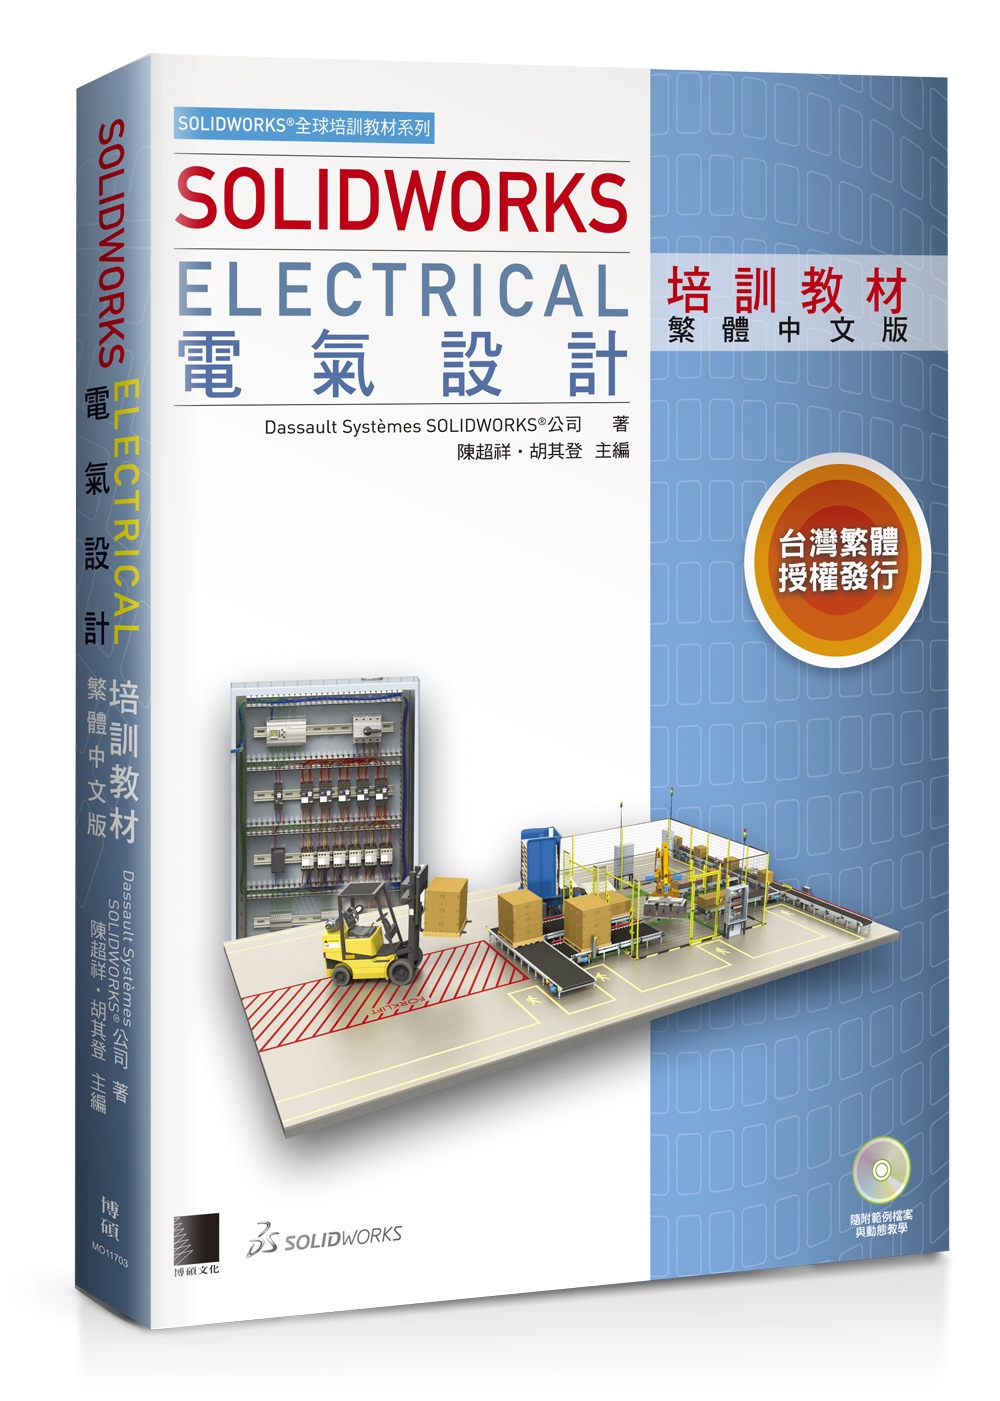 SOLIDWORKS Electrical 電氣設計培訓教材...